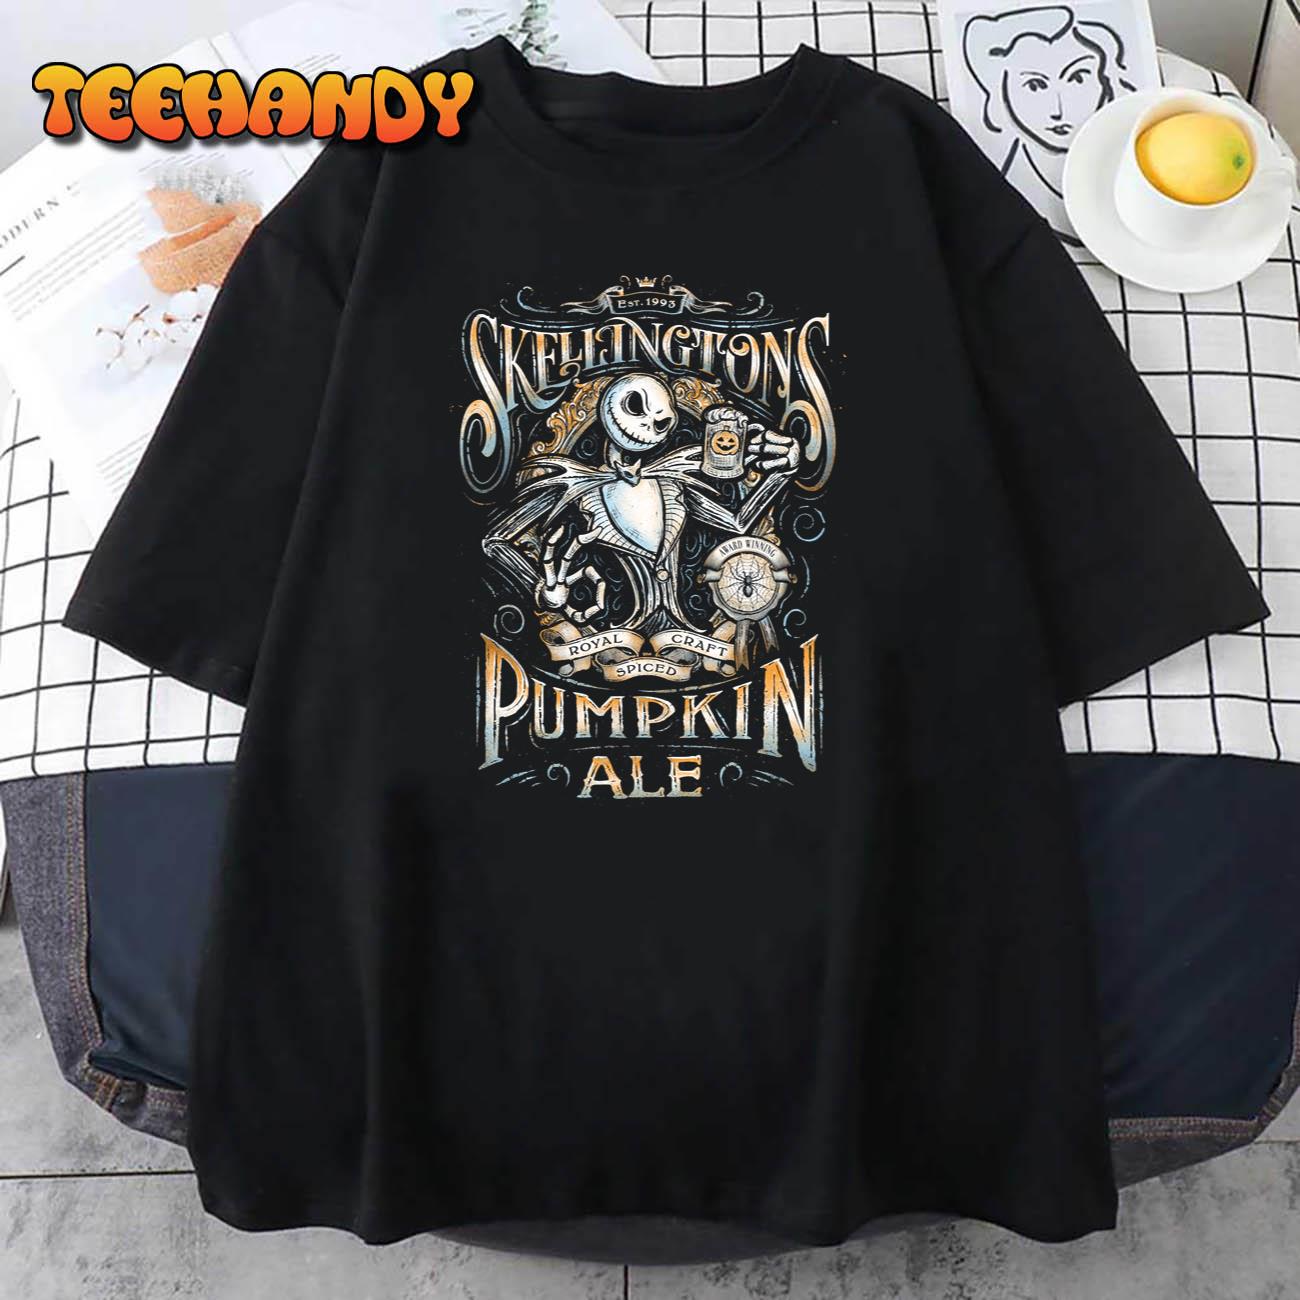 Jack’s Pumpkin Royal Craft Ale T-Shirt